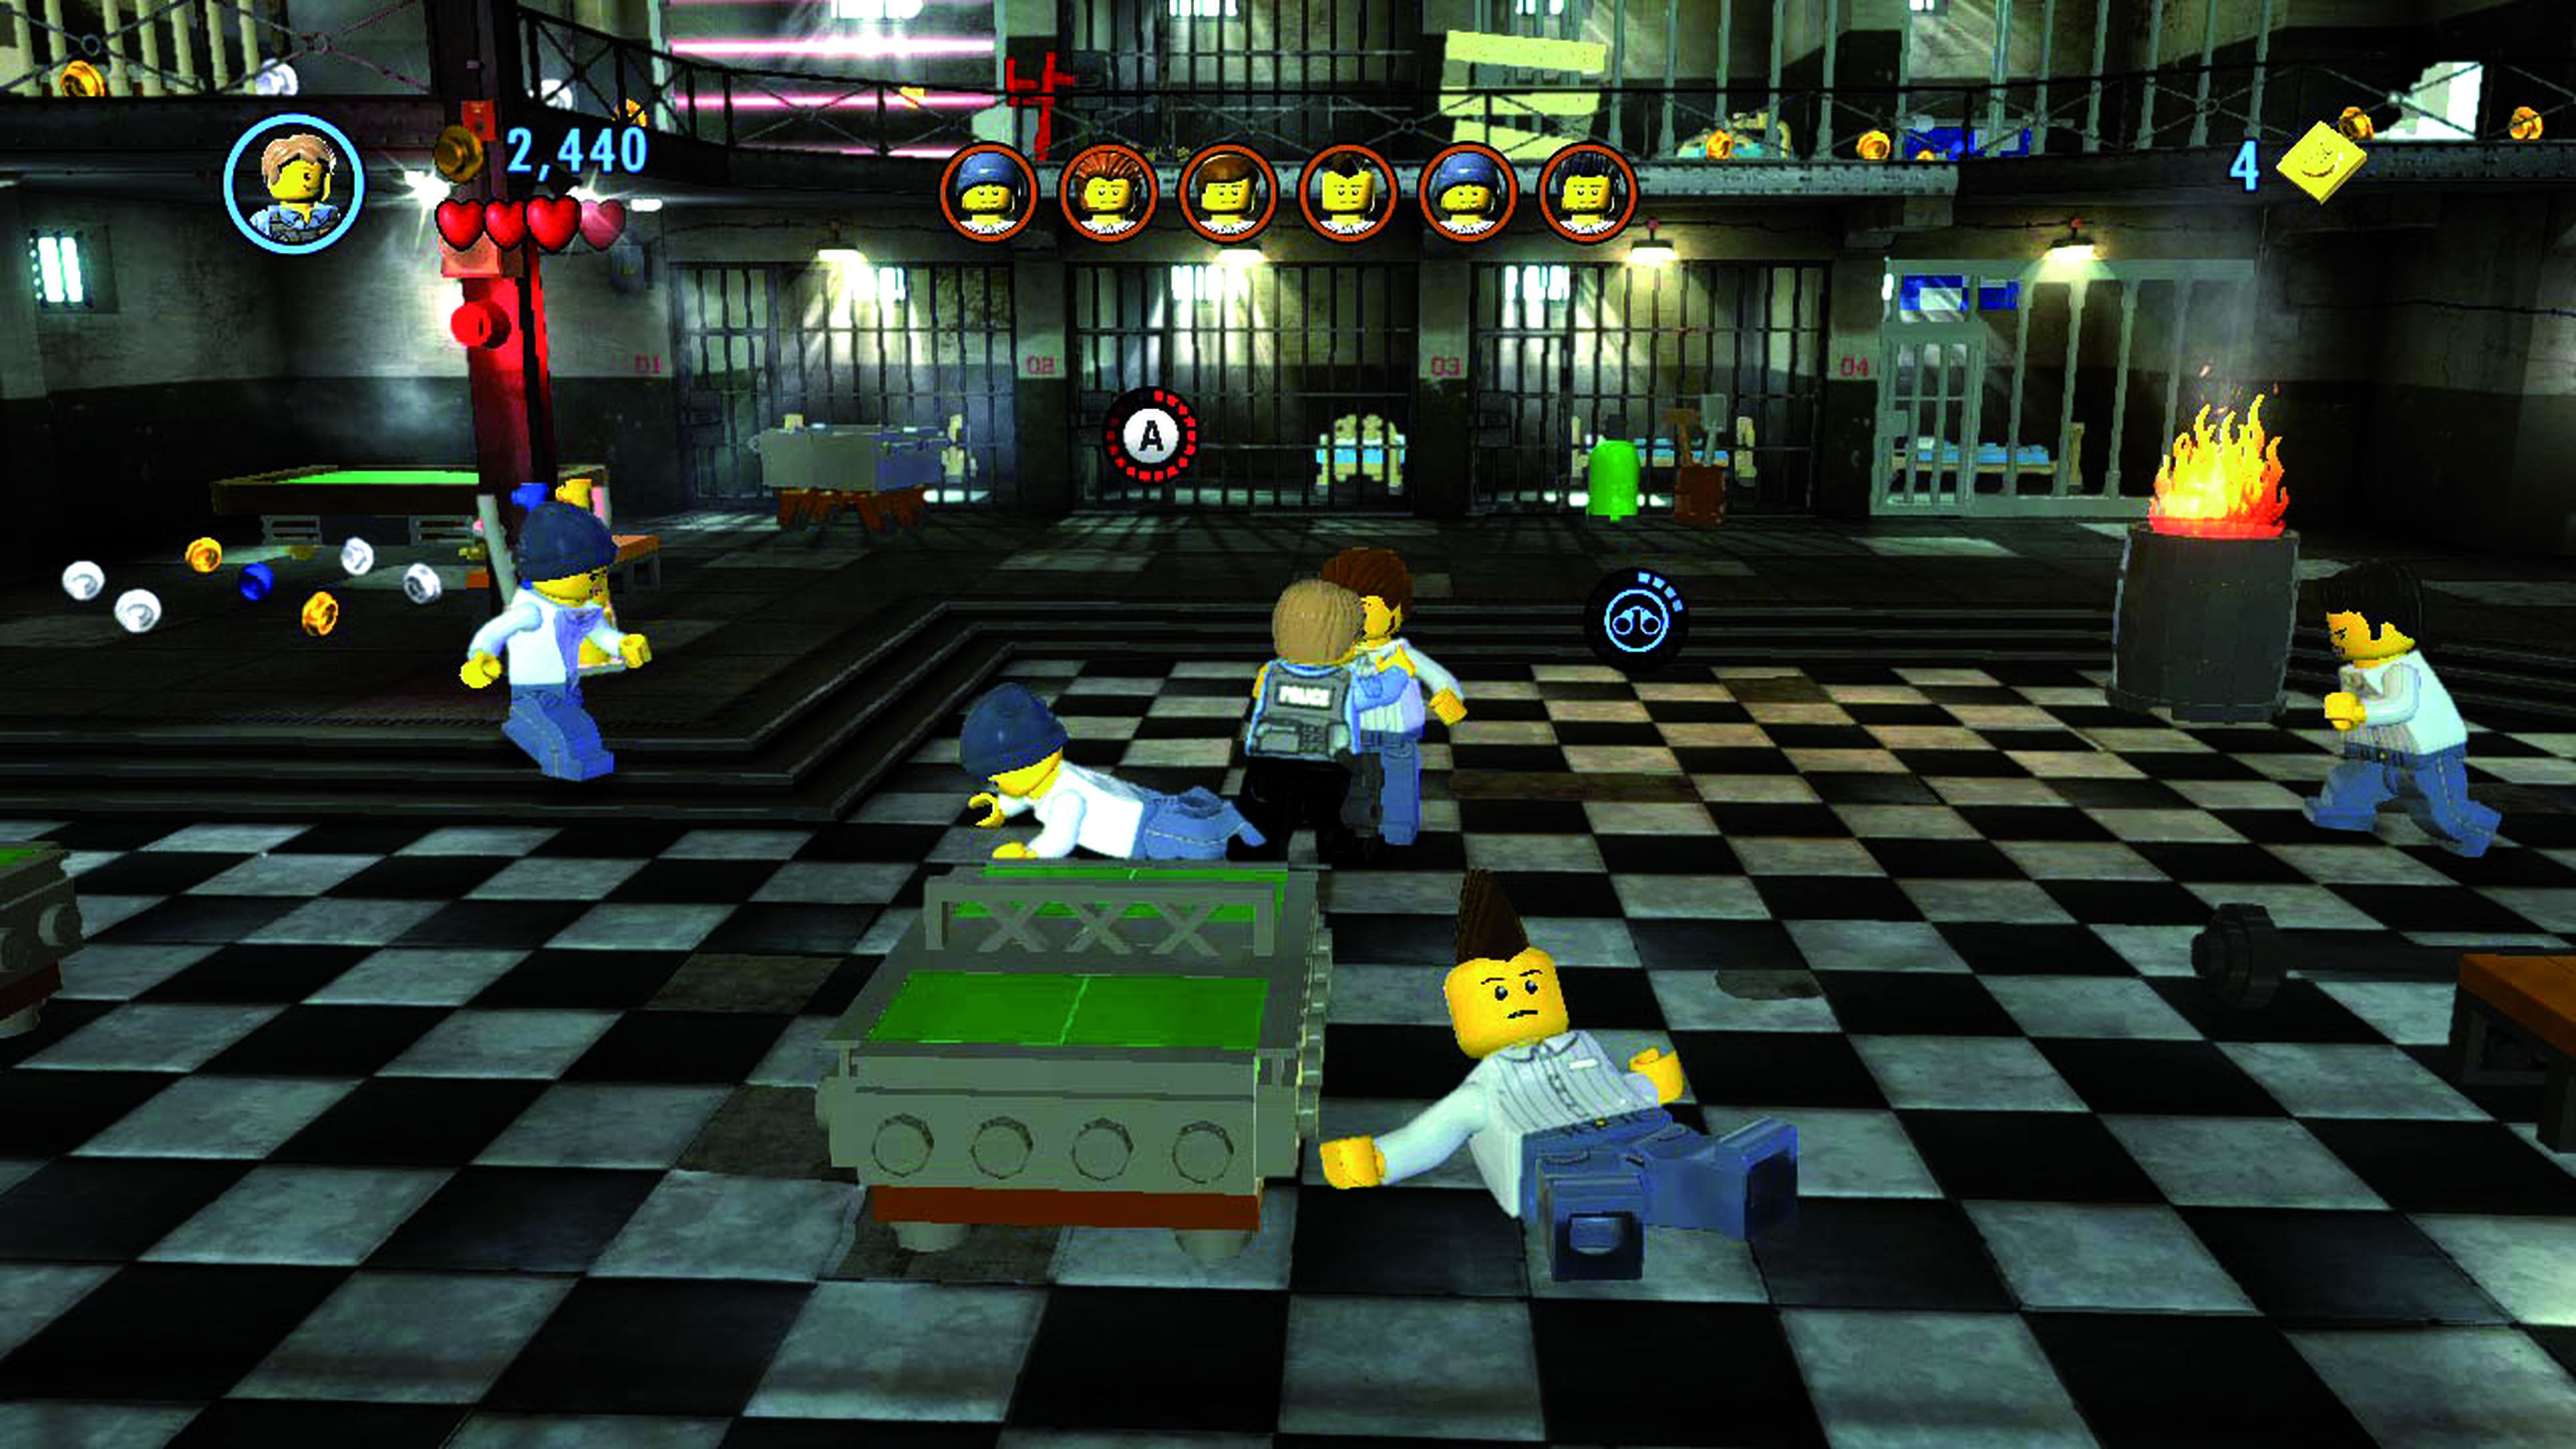 Análisis de Lego City Undercover